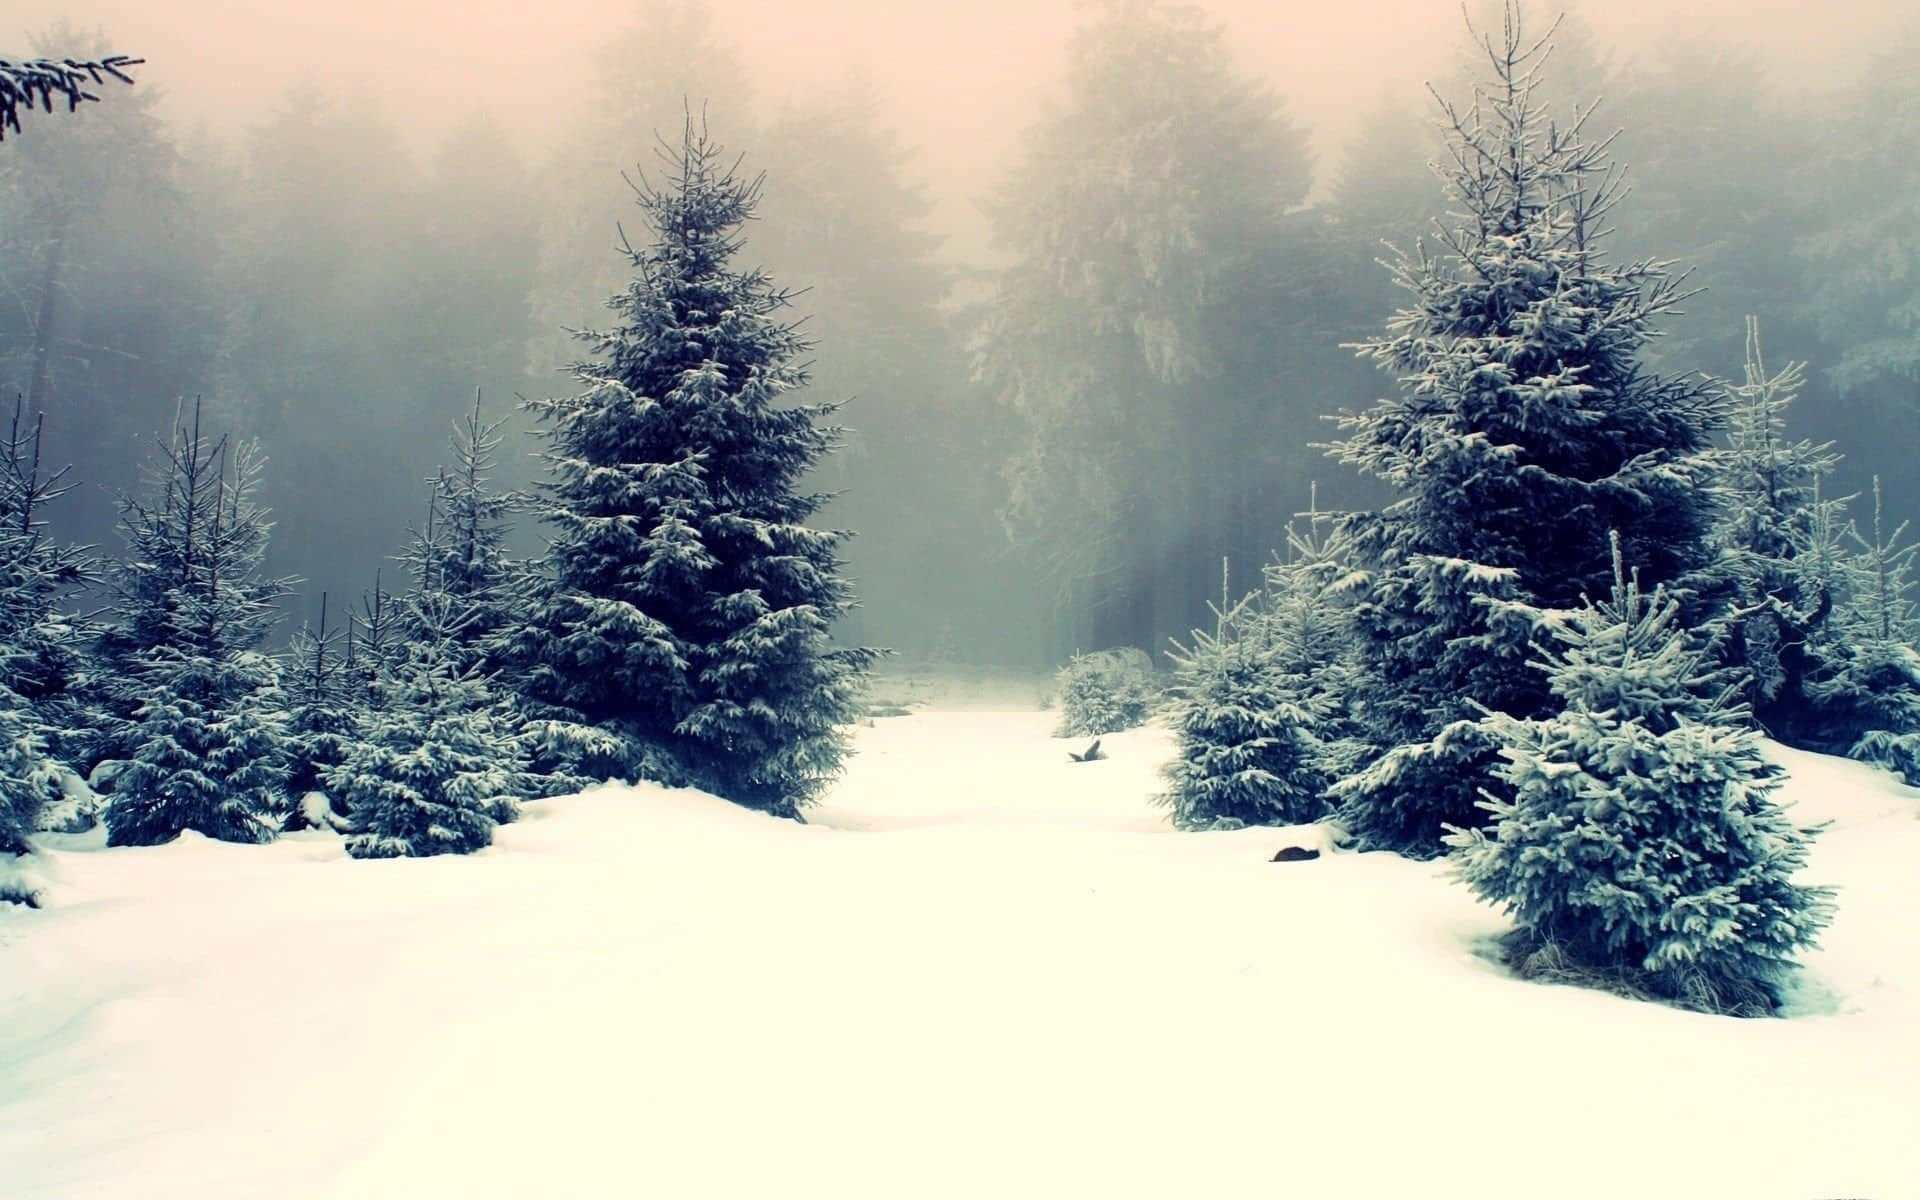 Serene Winter Trees in Snow-Covered Landscape Wallpaper